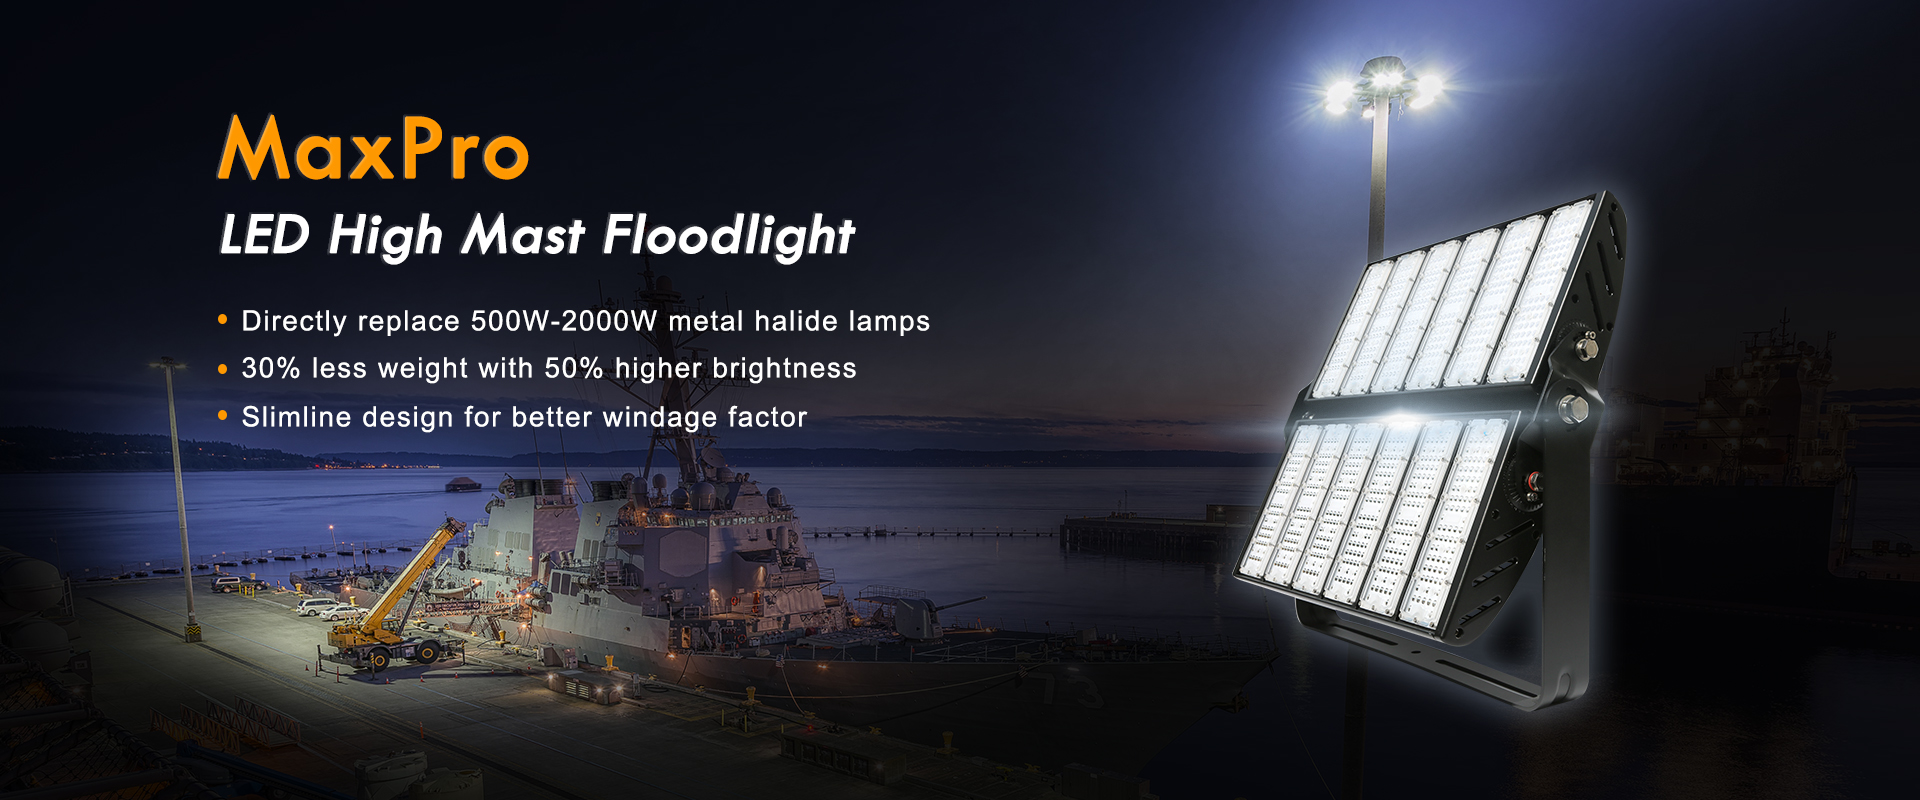 MaxPro LED High Mast Floodlight 